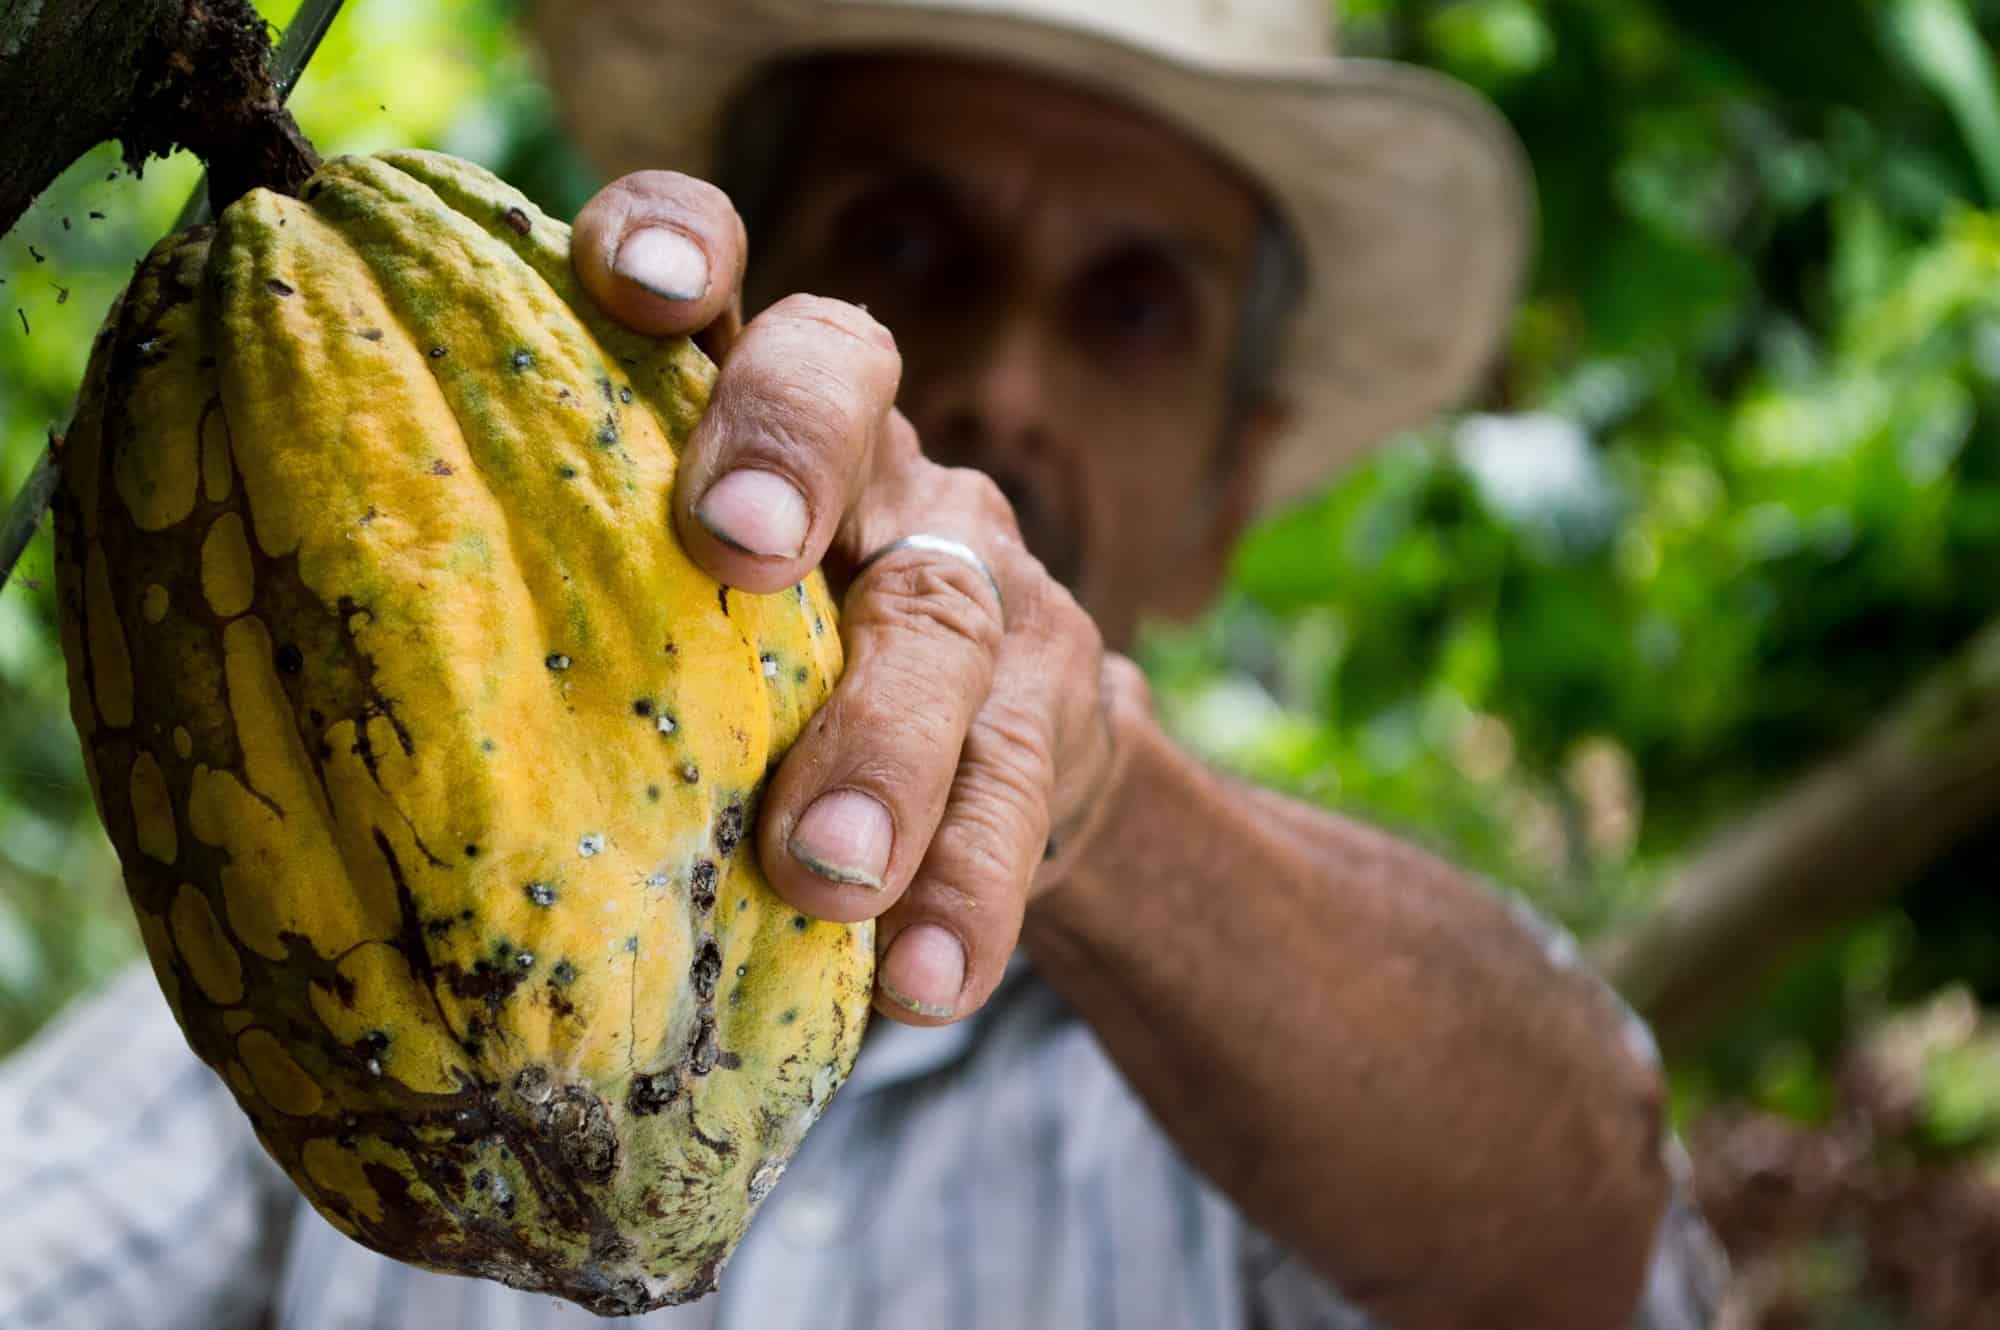 Rainforest Alliance Certified farmer of cocoa